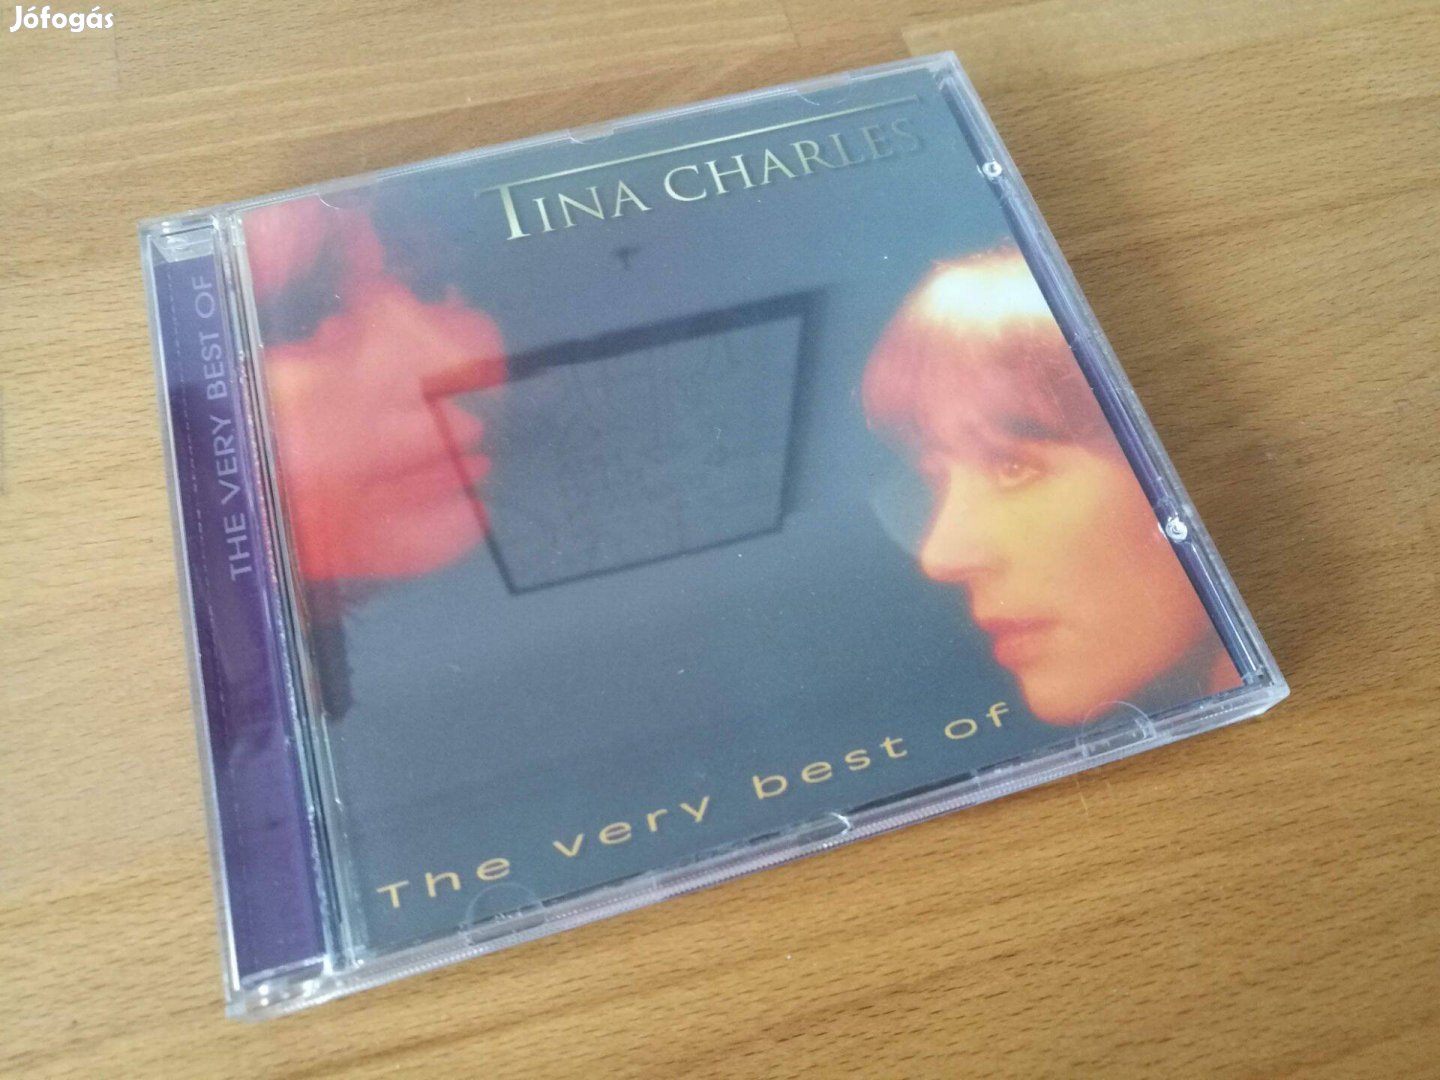 Tina Charles - Greatest hits (Hollandia, CBS, 1978, LP)